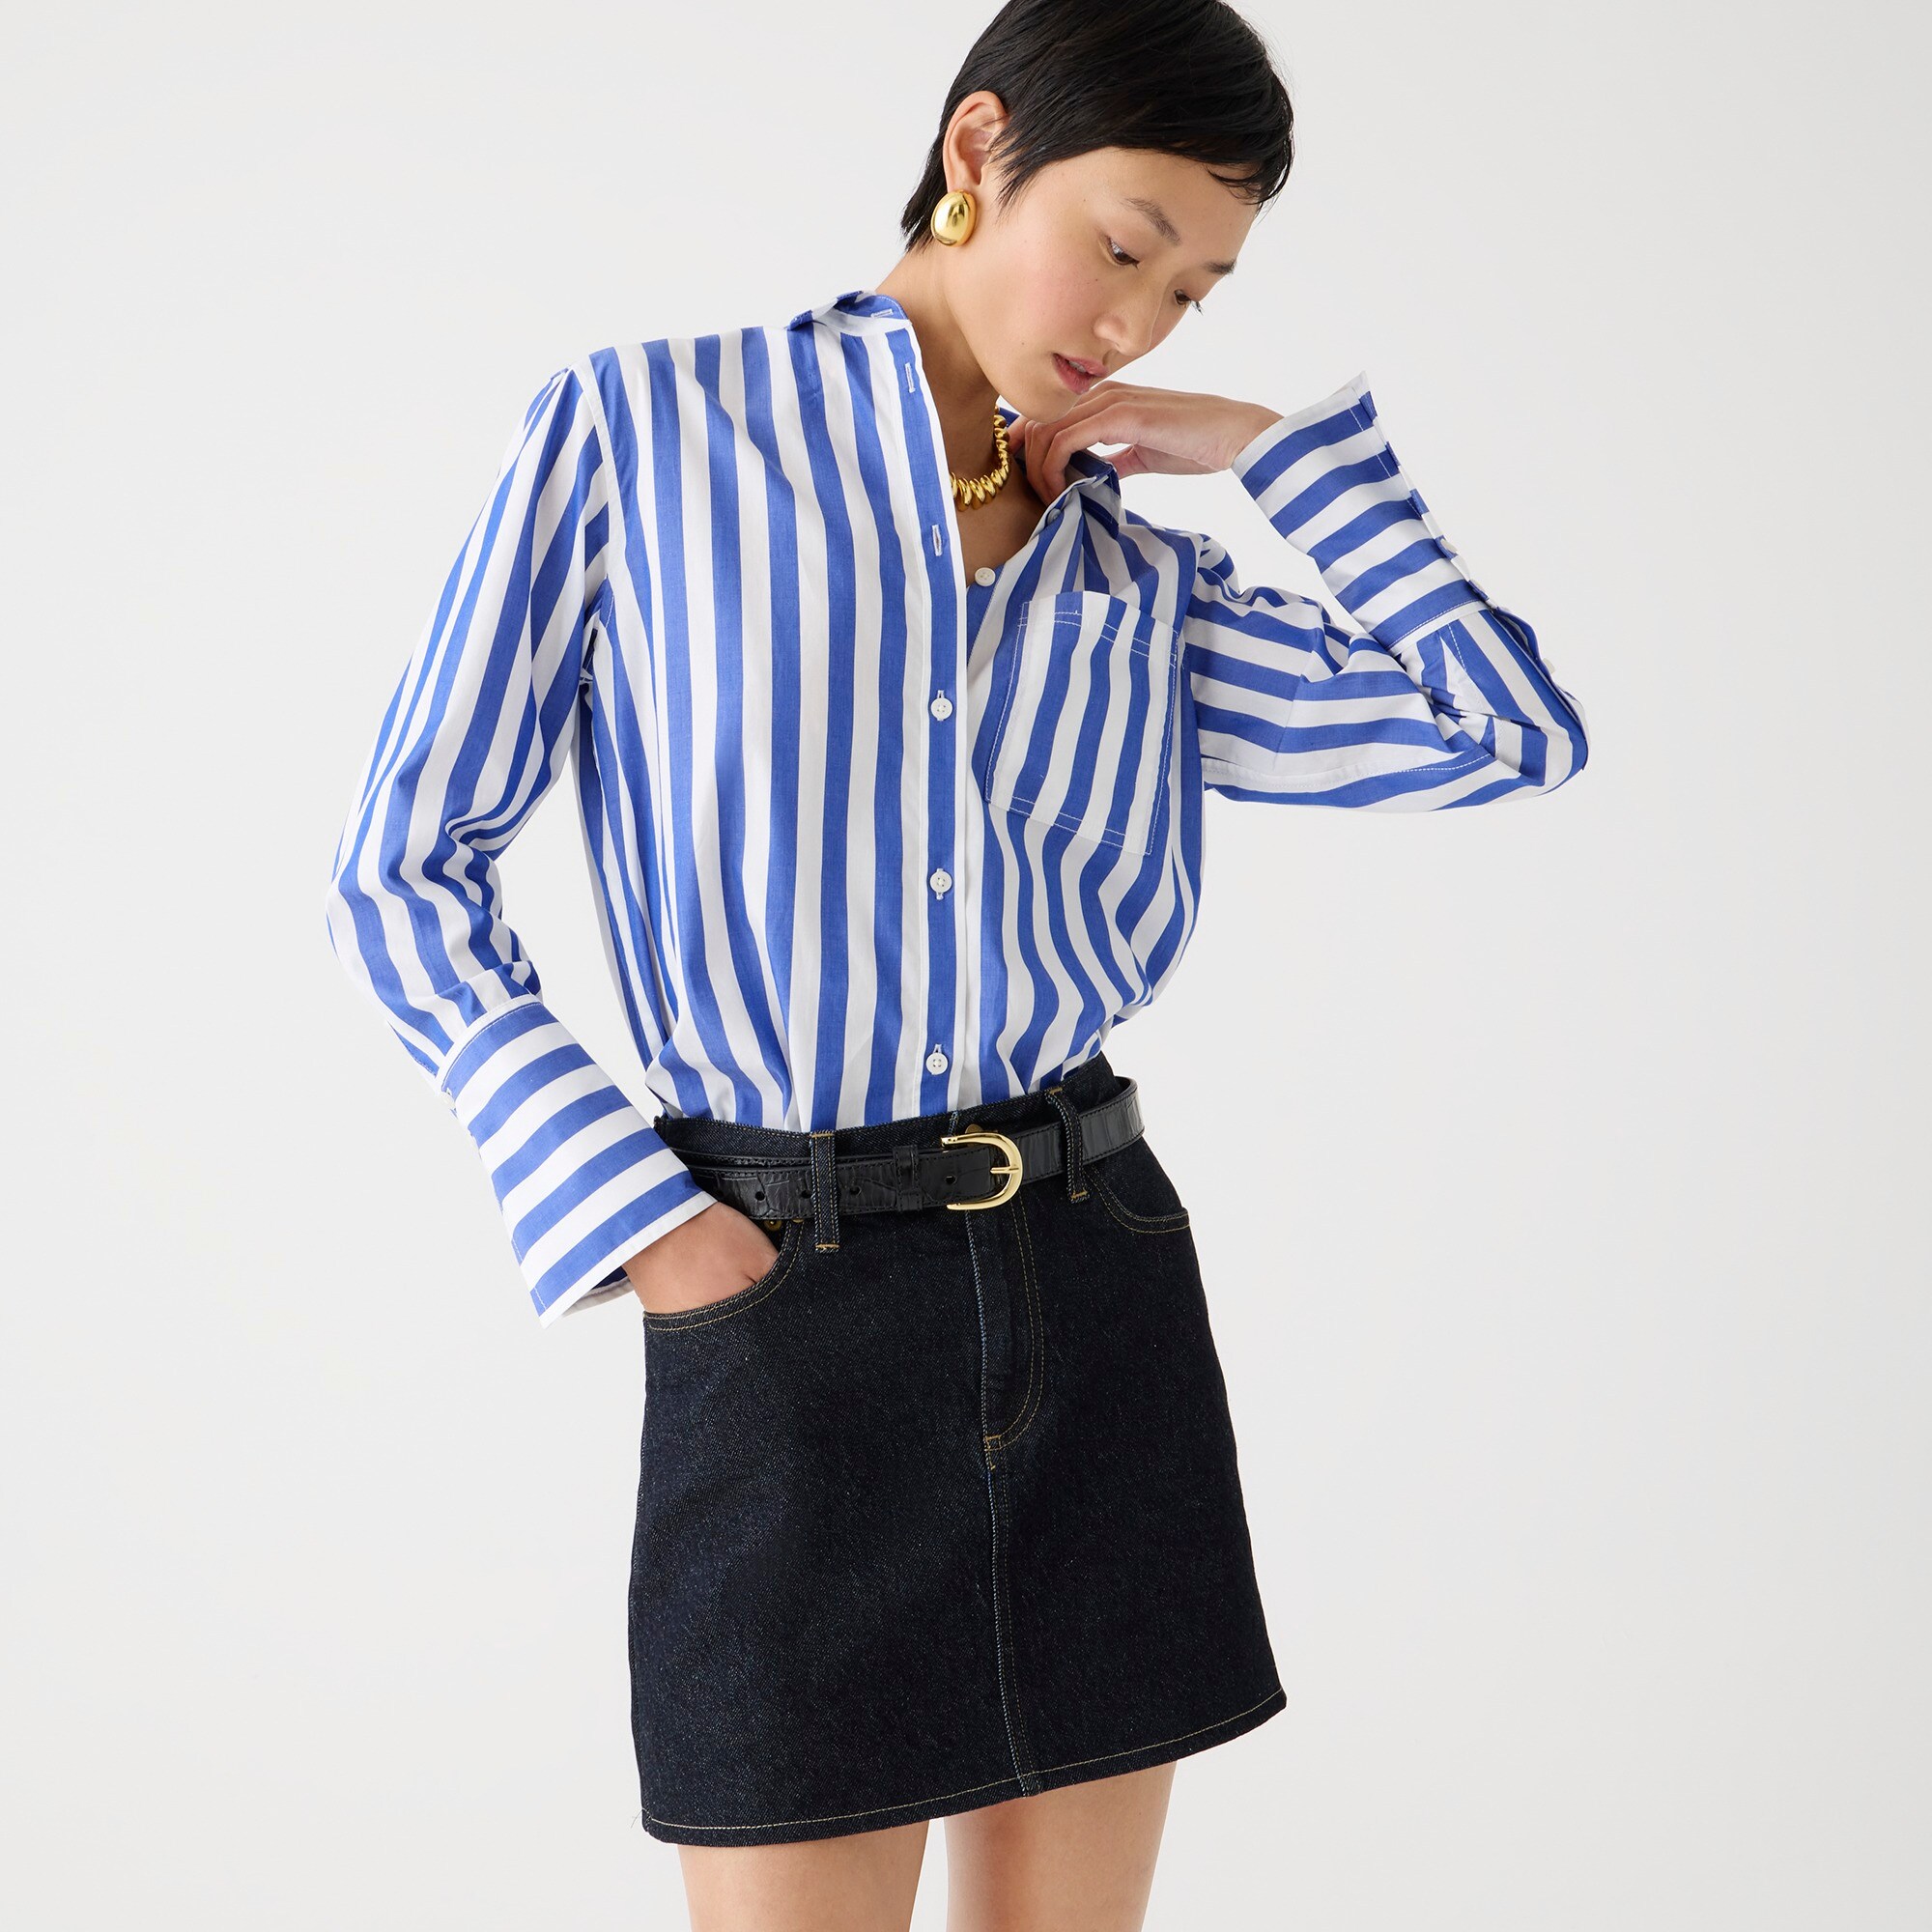  Gar&ccedil;on classic shirt in stripe cotton poplin